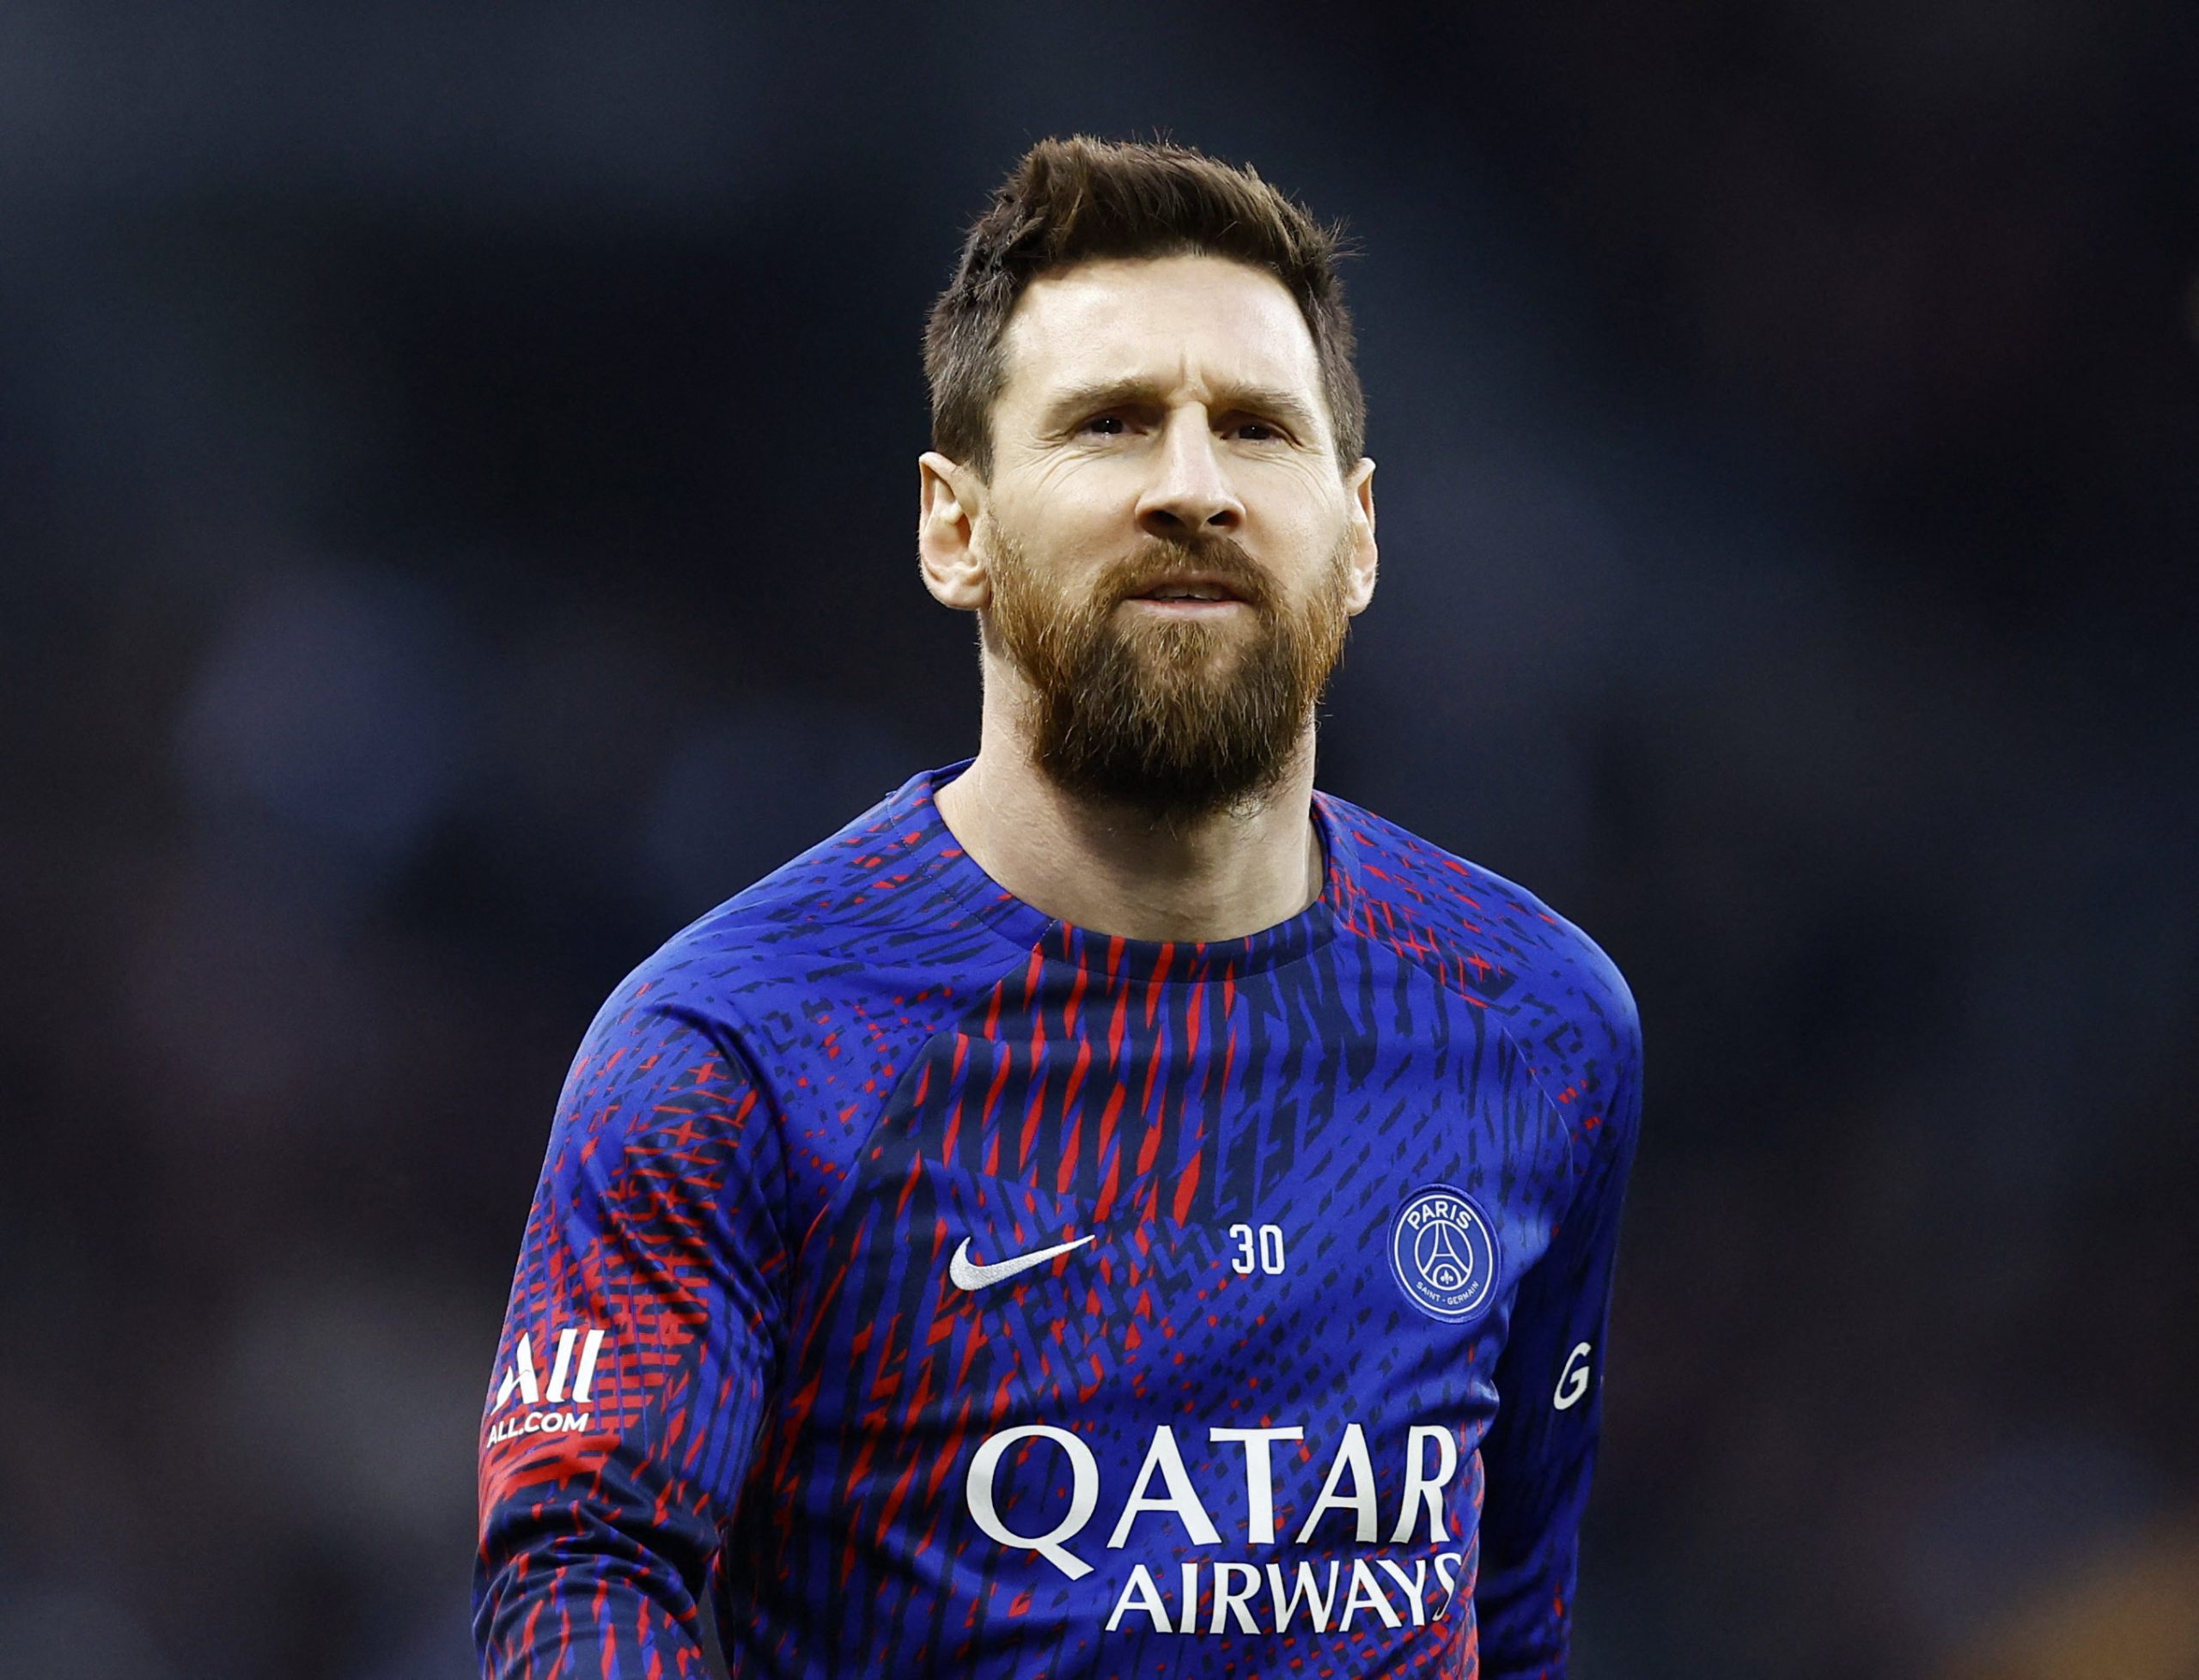 Chiều cao của Messi